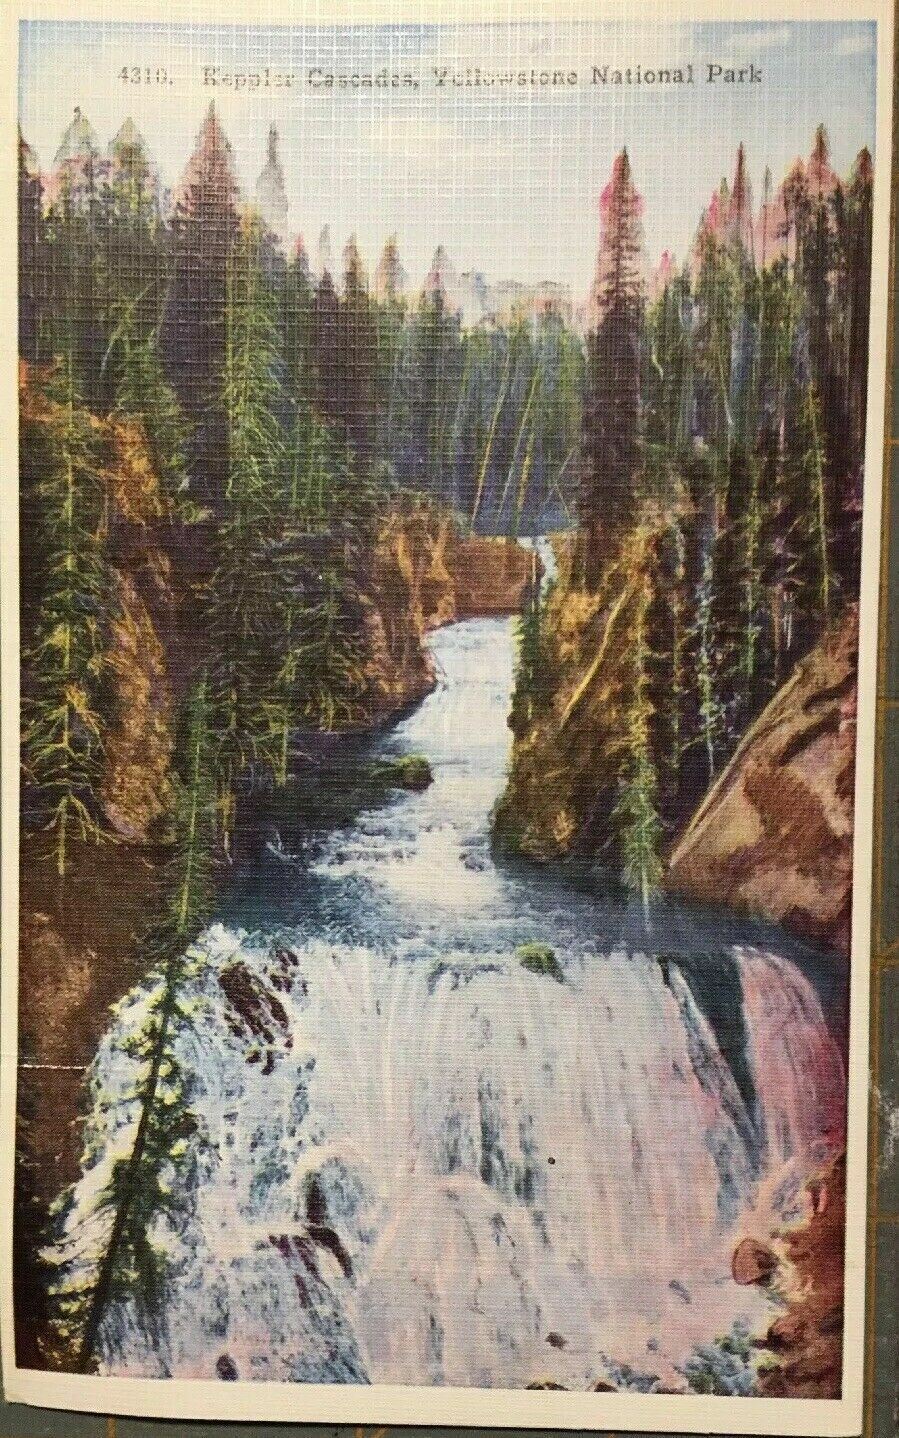 Kepler Cascades Yellow Stone National Park Vintage Postcard 1A